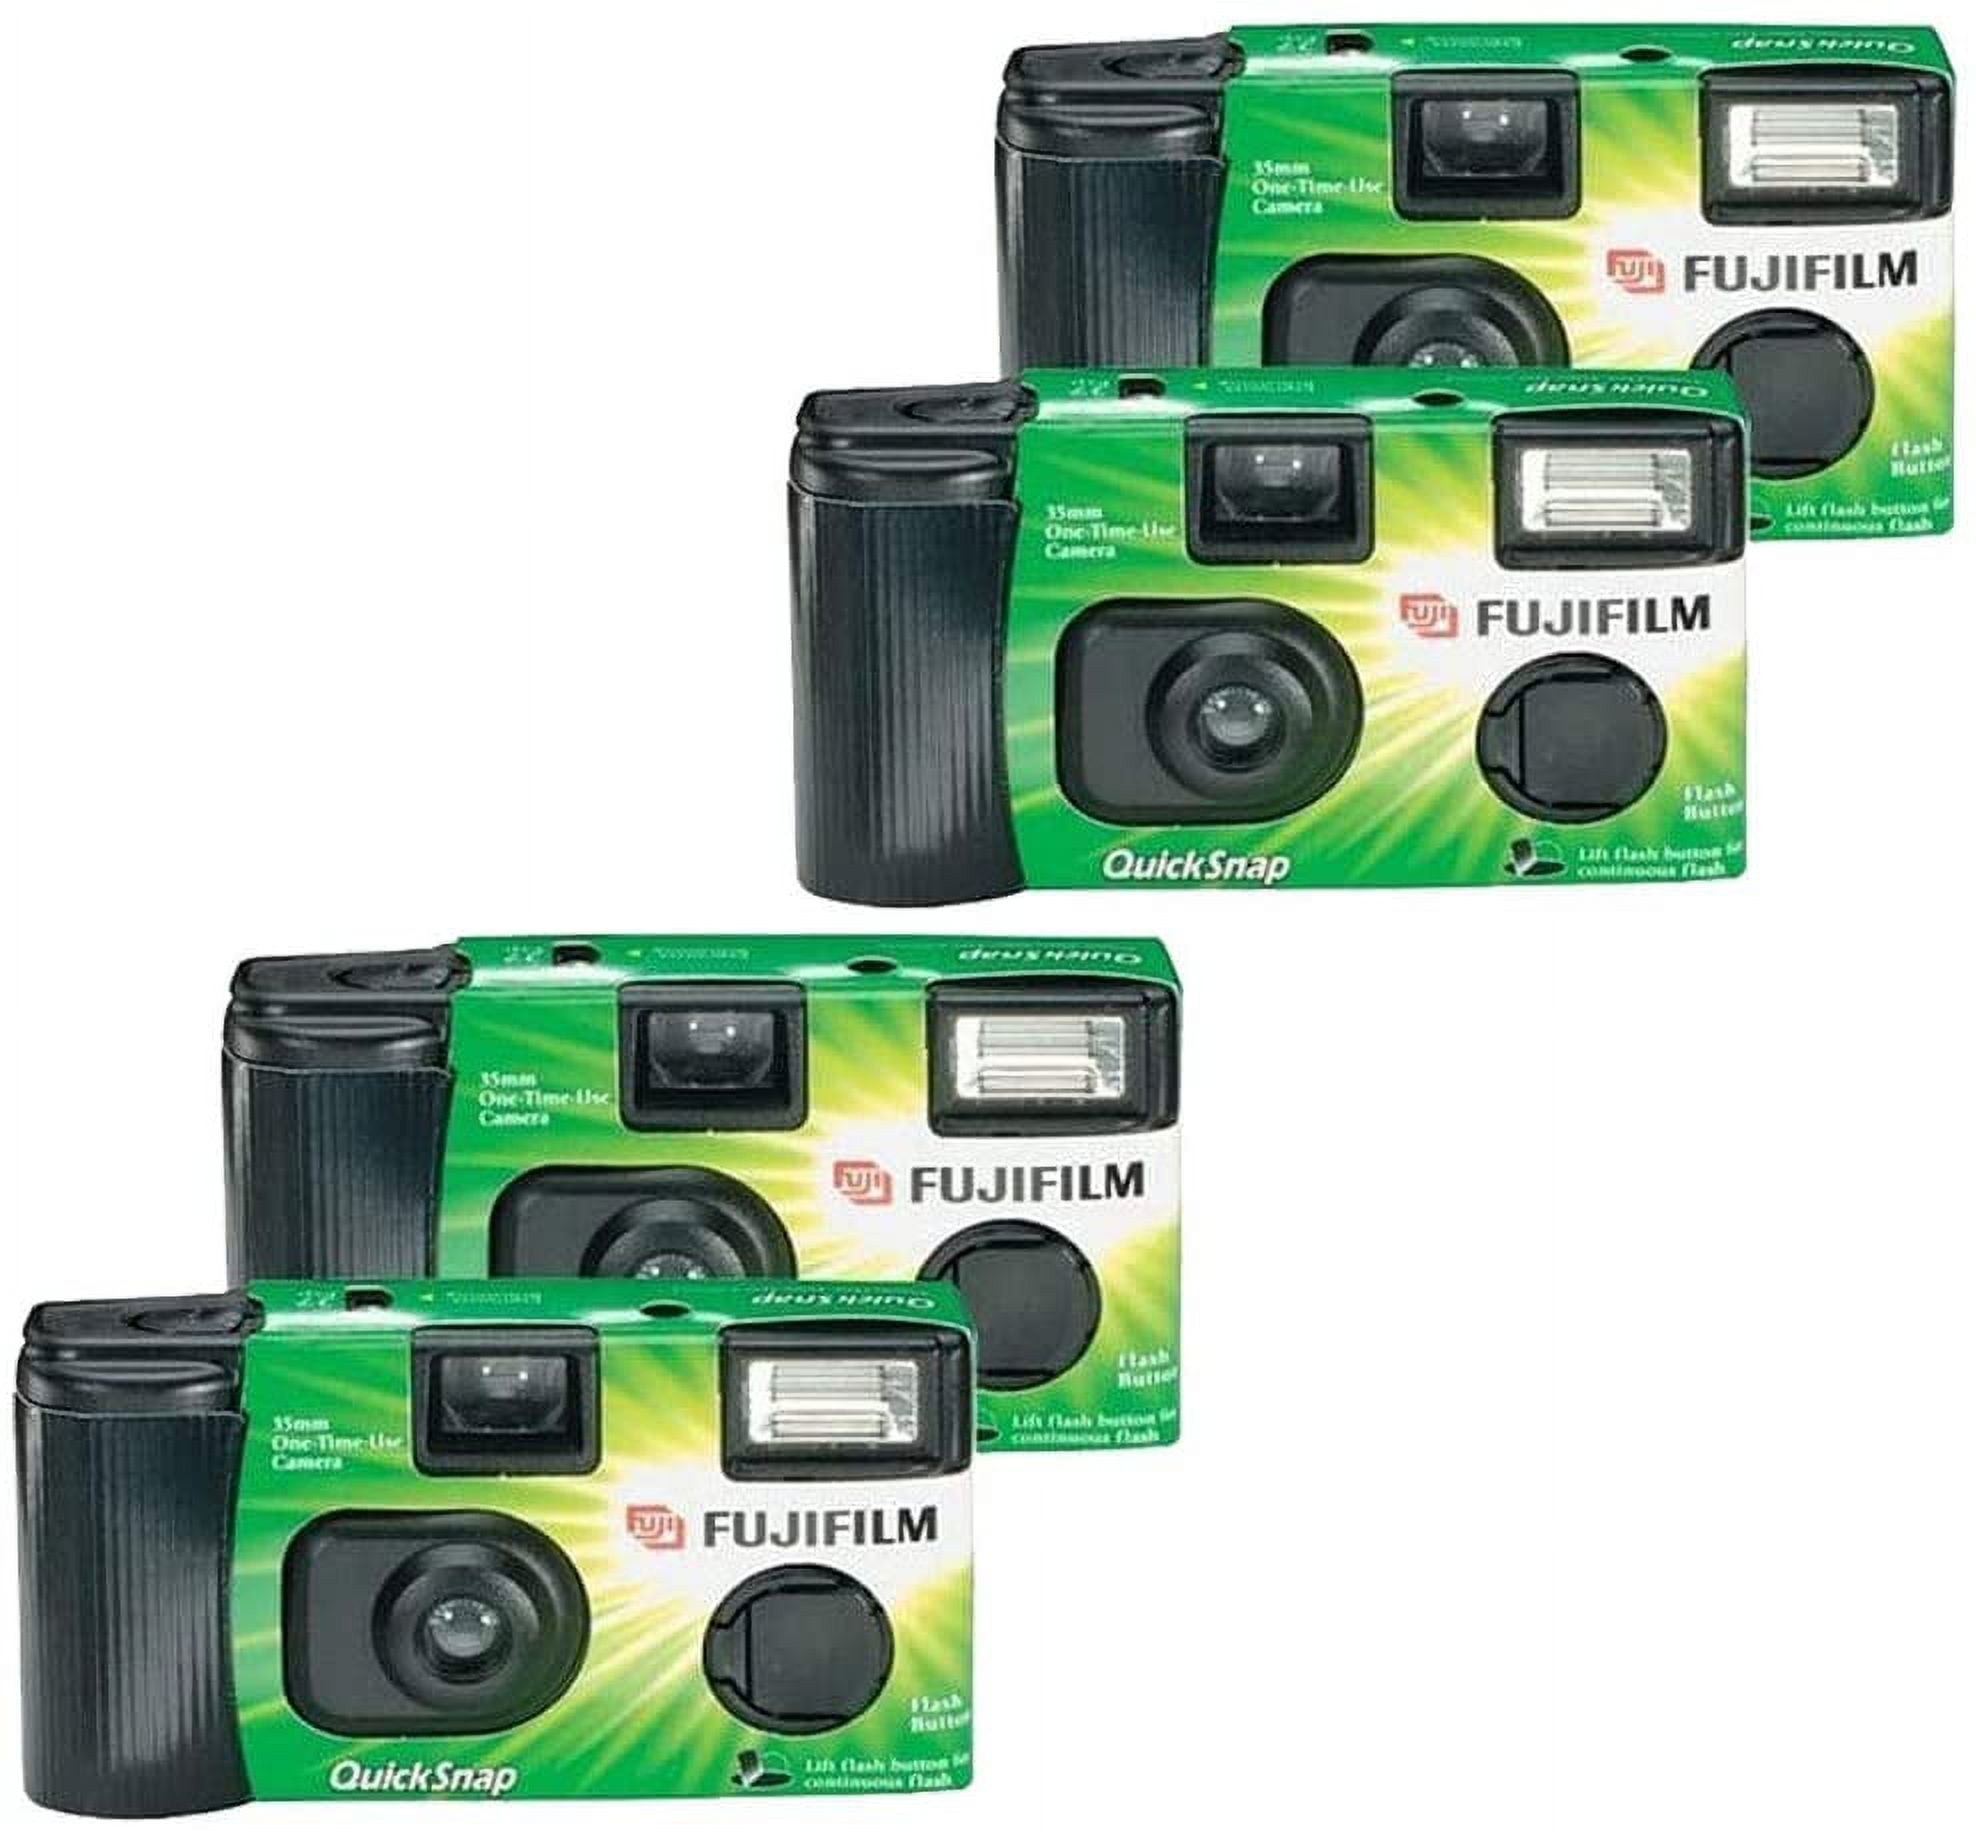 Digital File: Disposable Camera SVG for FUJIFILM Quicksnap Camera